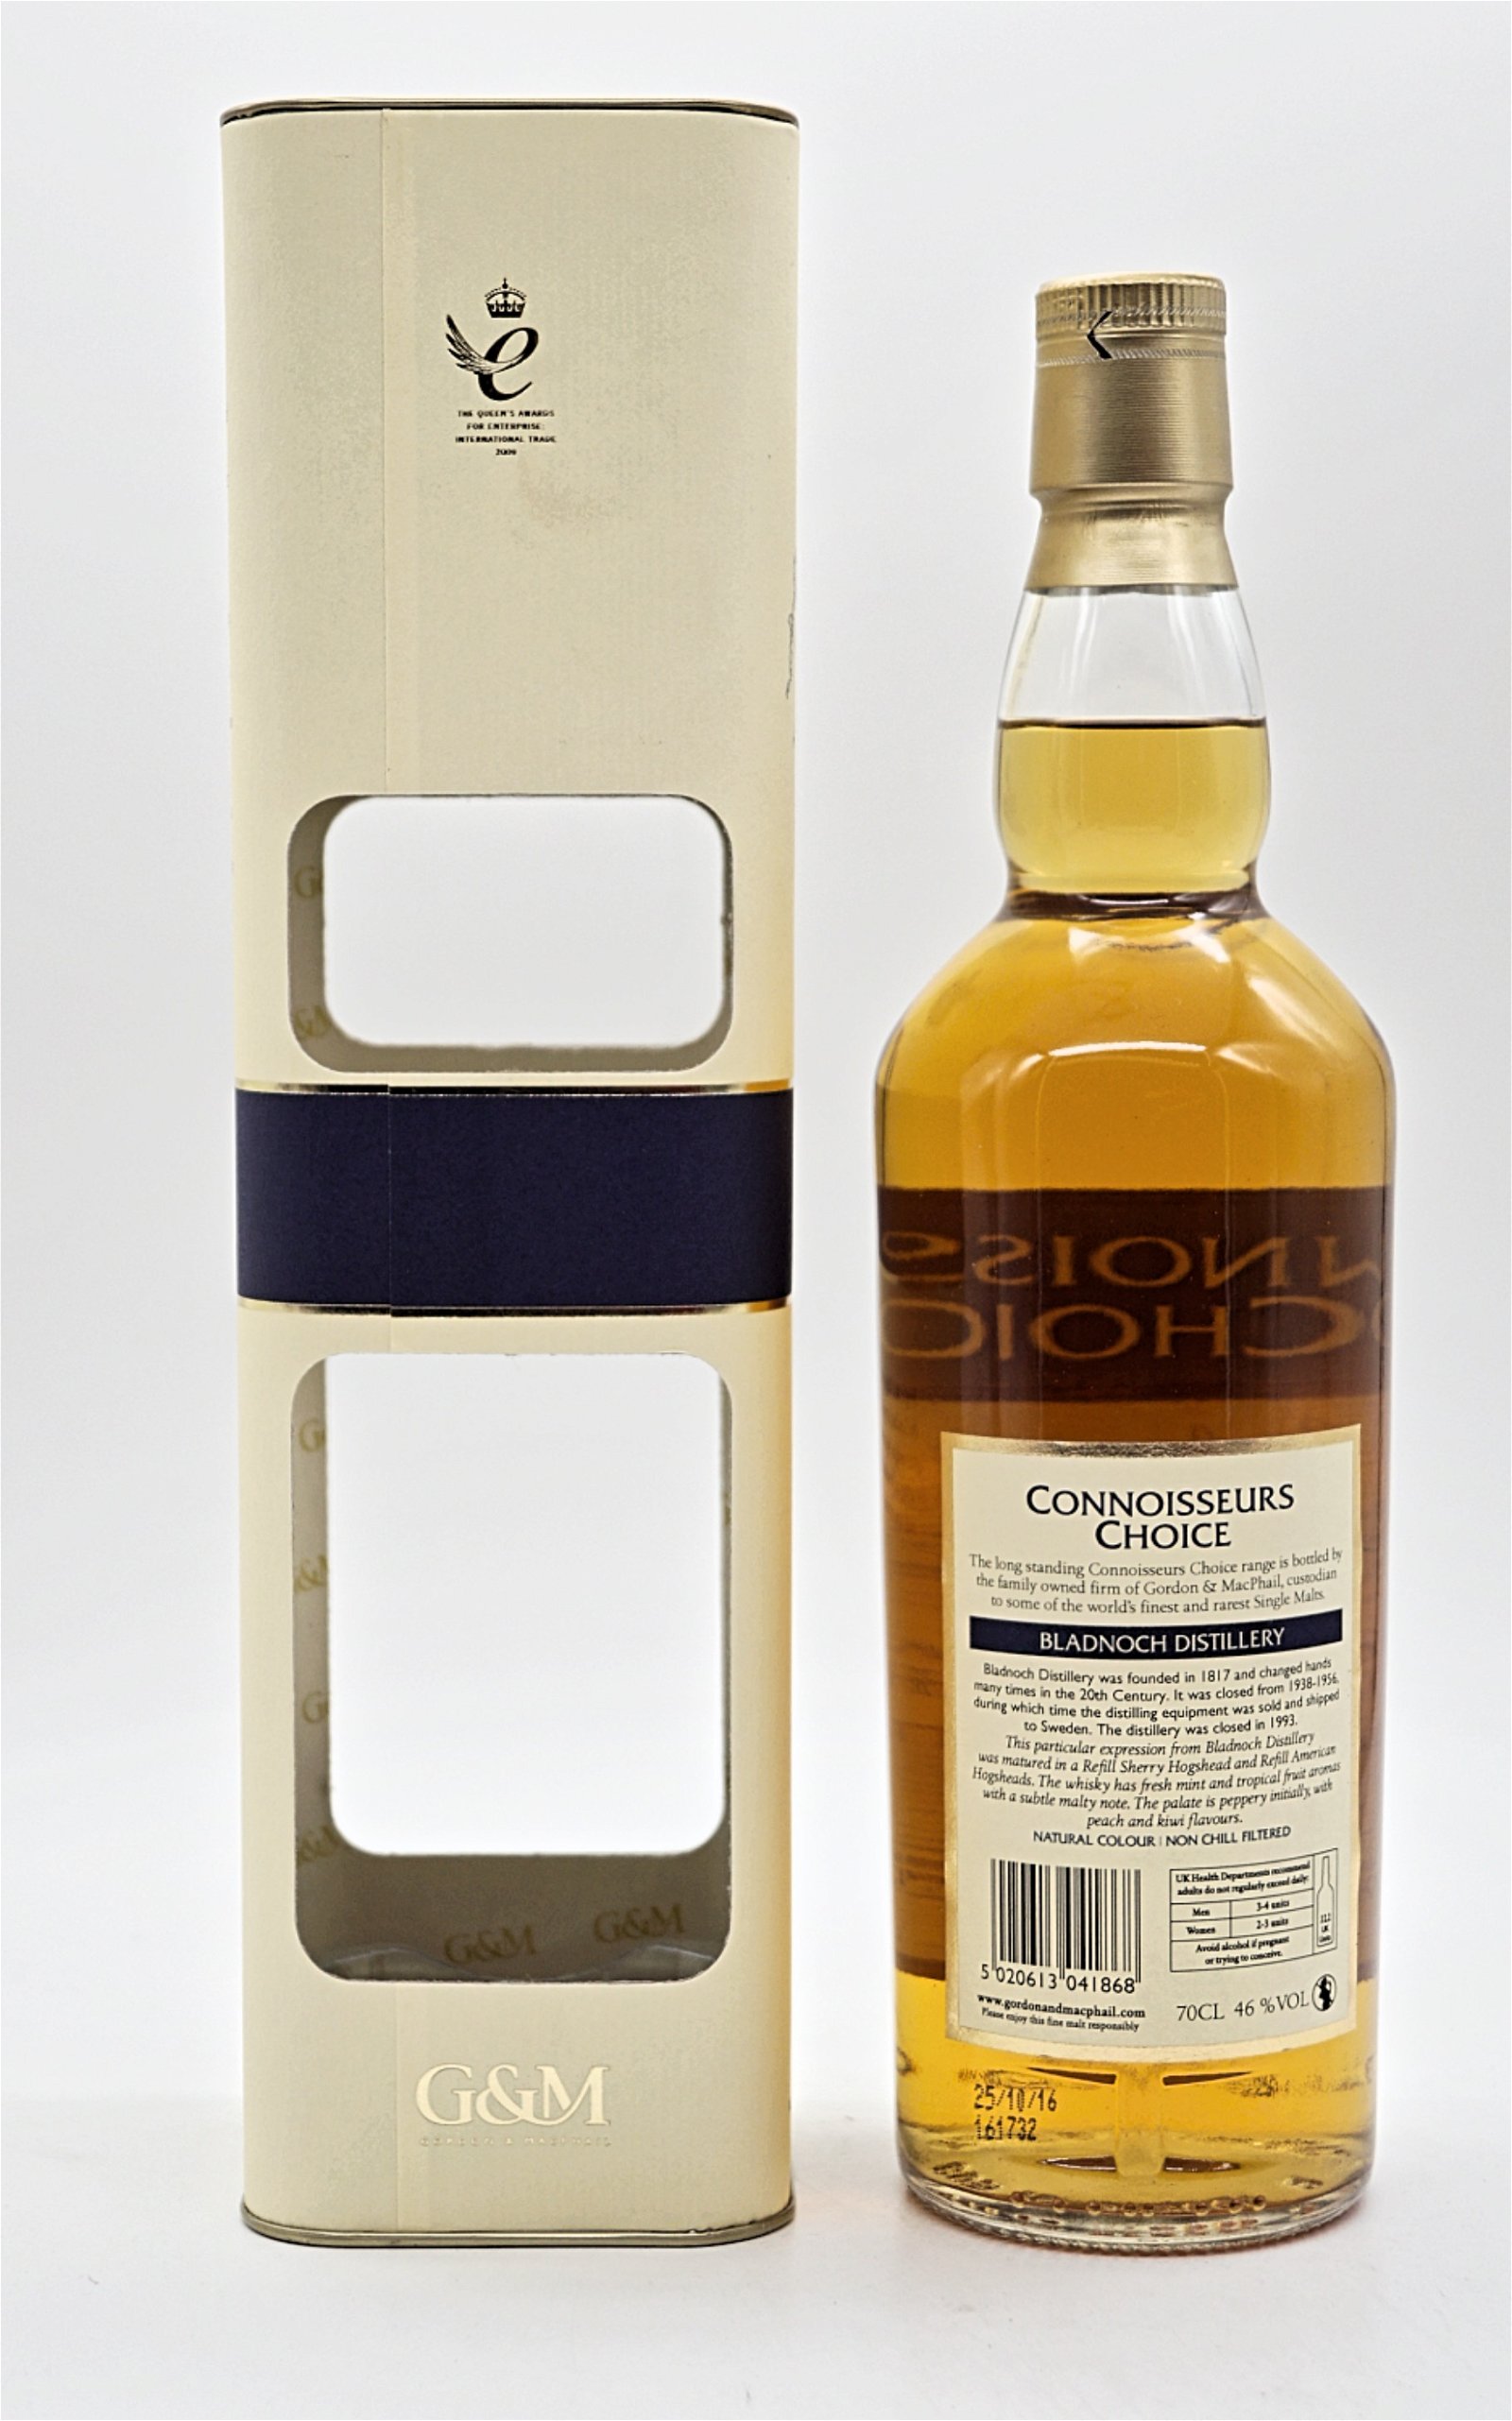 Gordon & Macphail Connoisseurs Choice Bladnoch Distillery 1993/2016 Single Malt Scotch Whisky